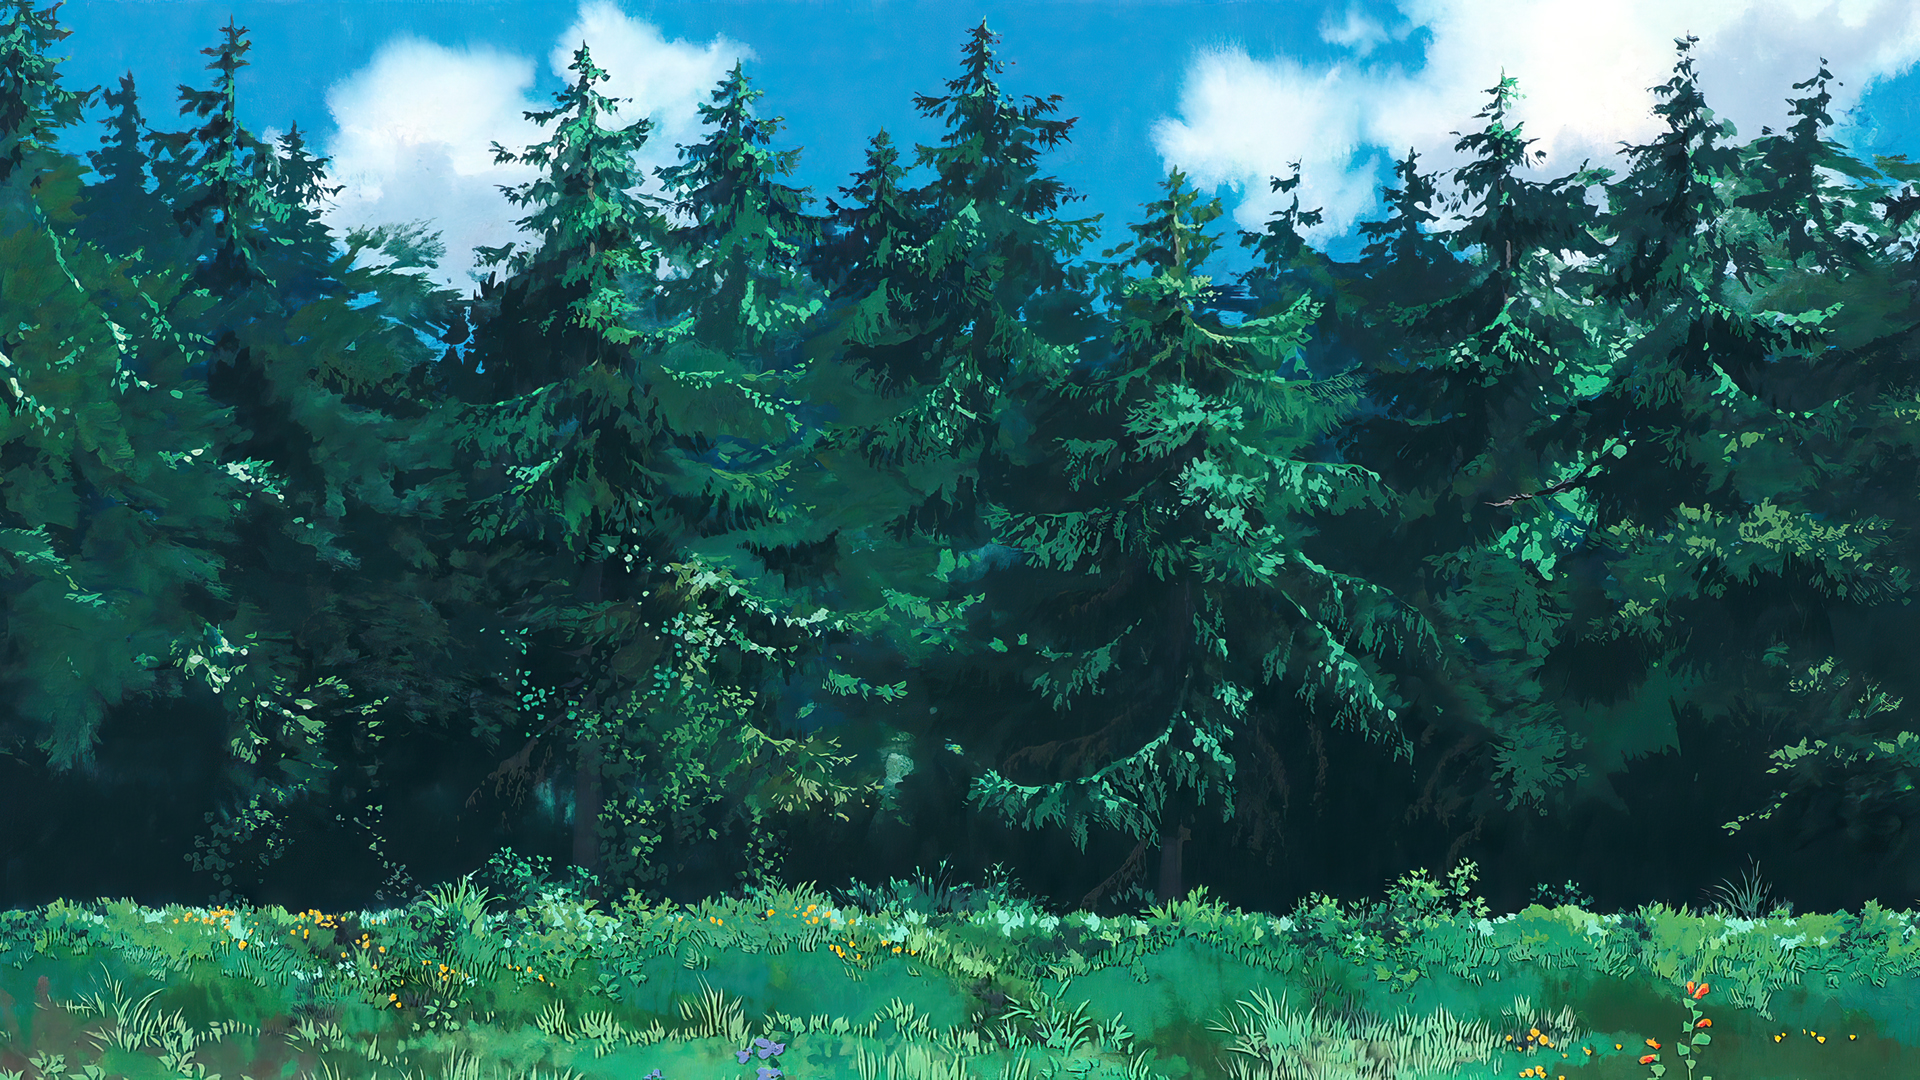 Anime 1920x1080 Kiki's Delivery Service animated movies anime animation film stills Studio Ghibli Hayao Miyazaki forest trees grass sky clouds flowers